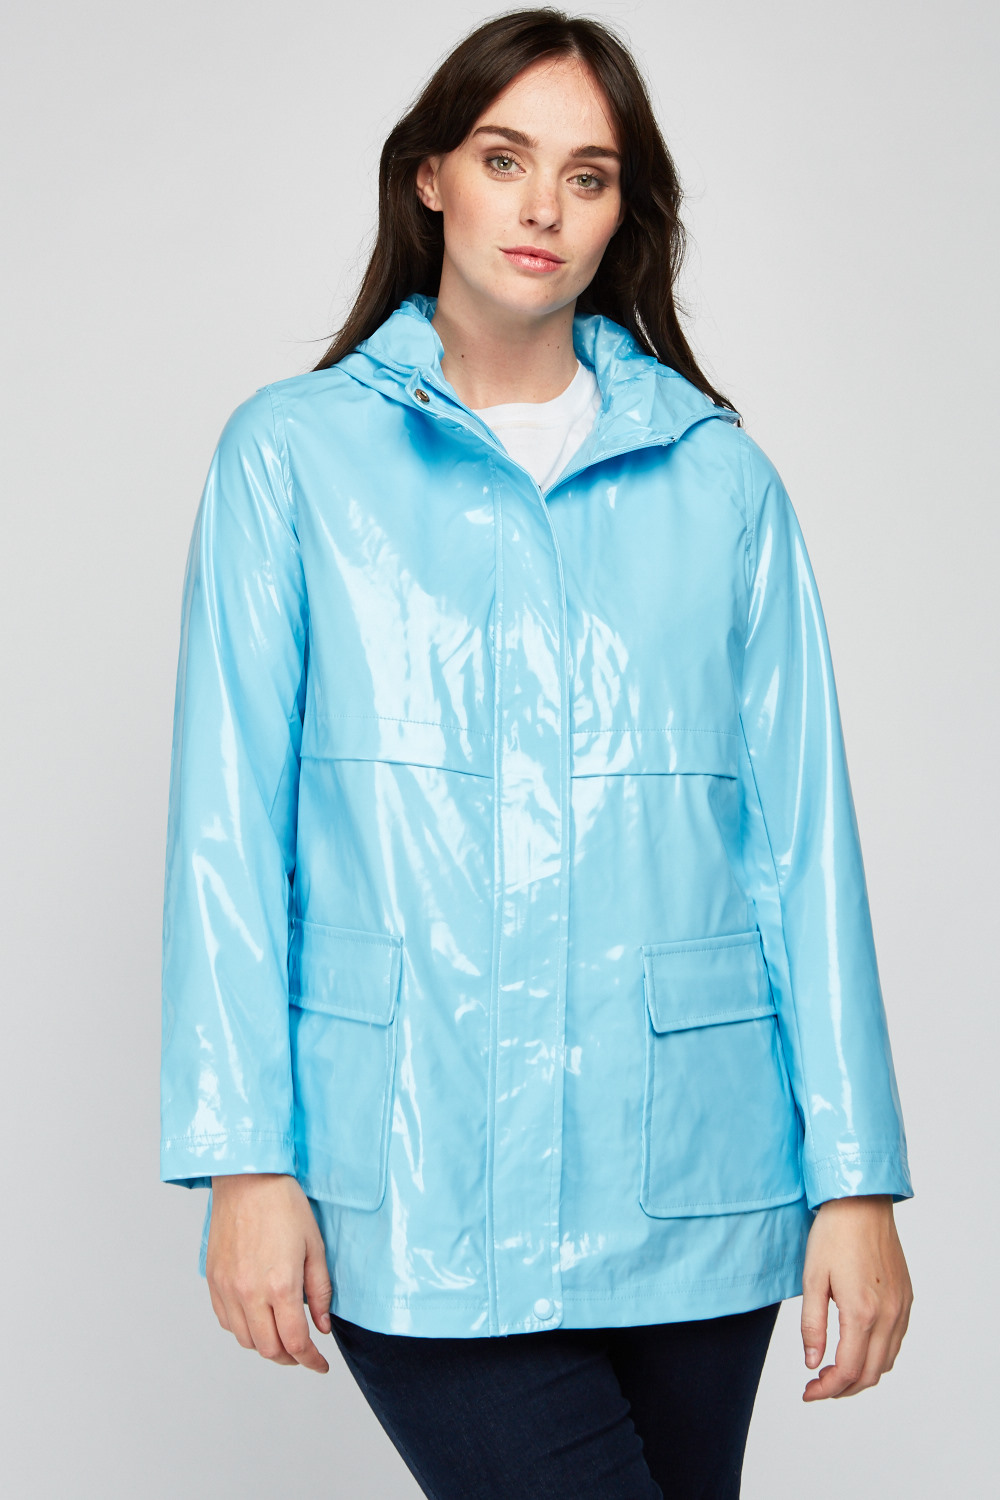 Sky Blue Vinyl Raincoat - Just $7